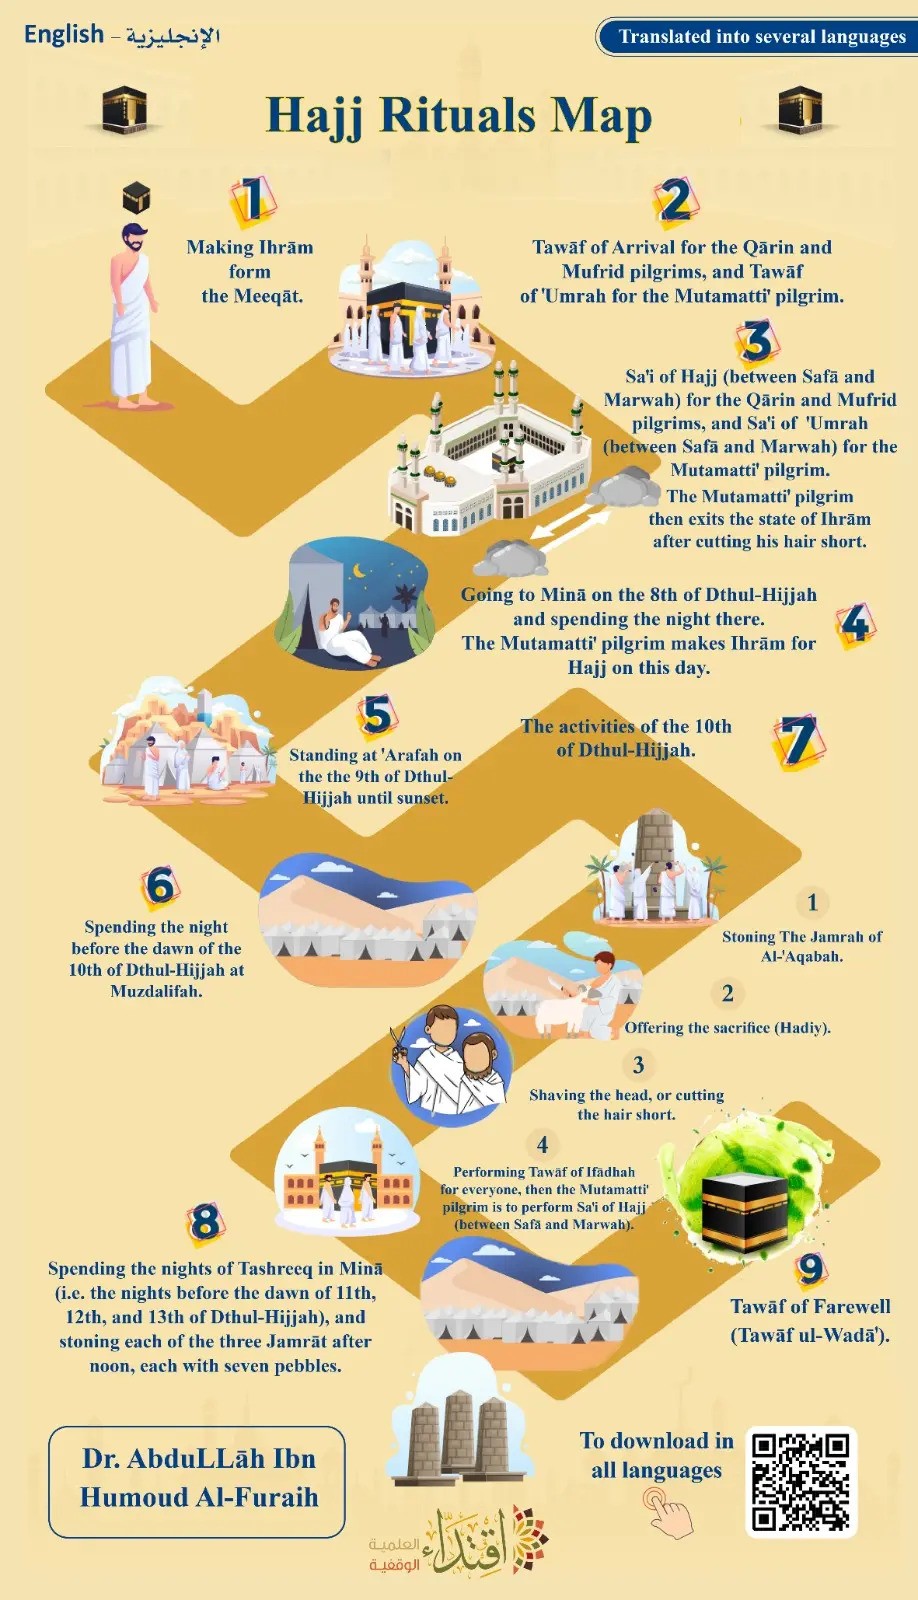 Hajj Rituals Map in 18 languages